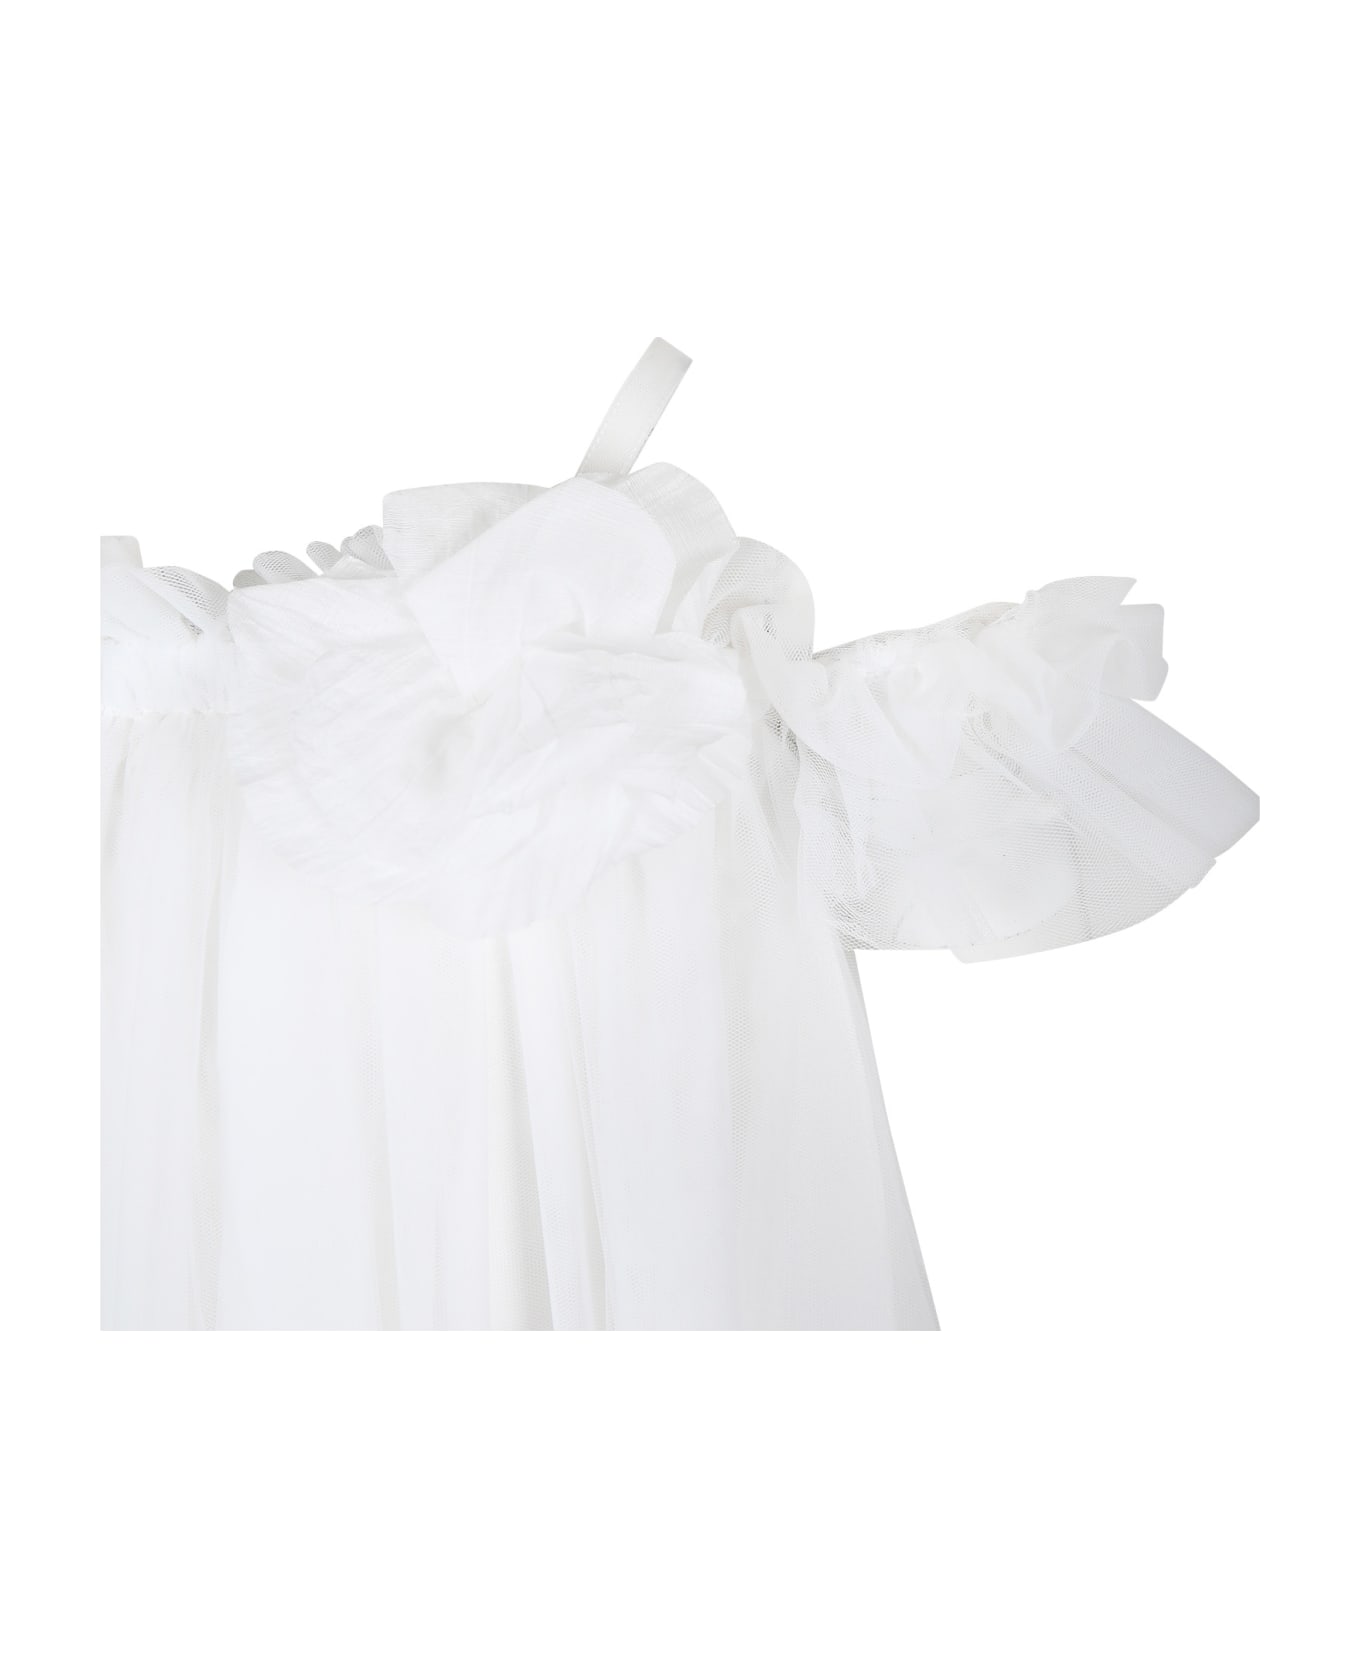 Ermanno Scervino Junior White Dress For Girl With Flower - White